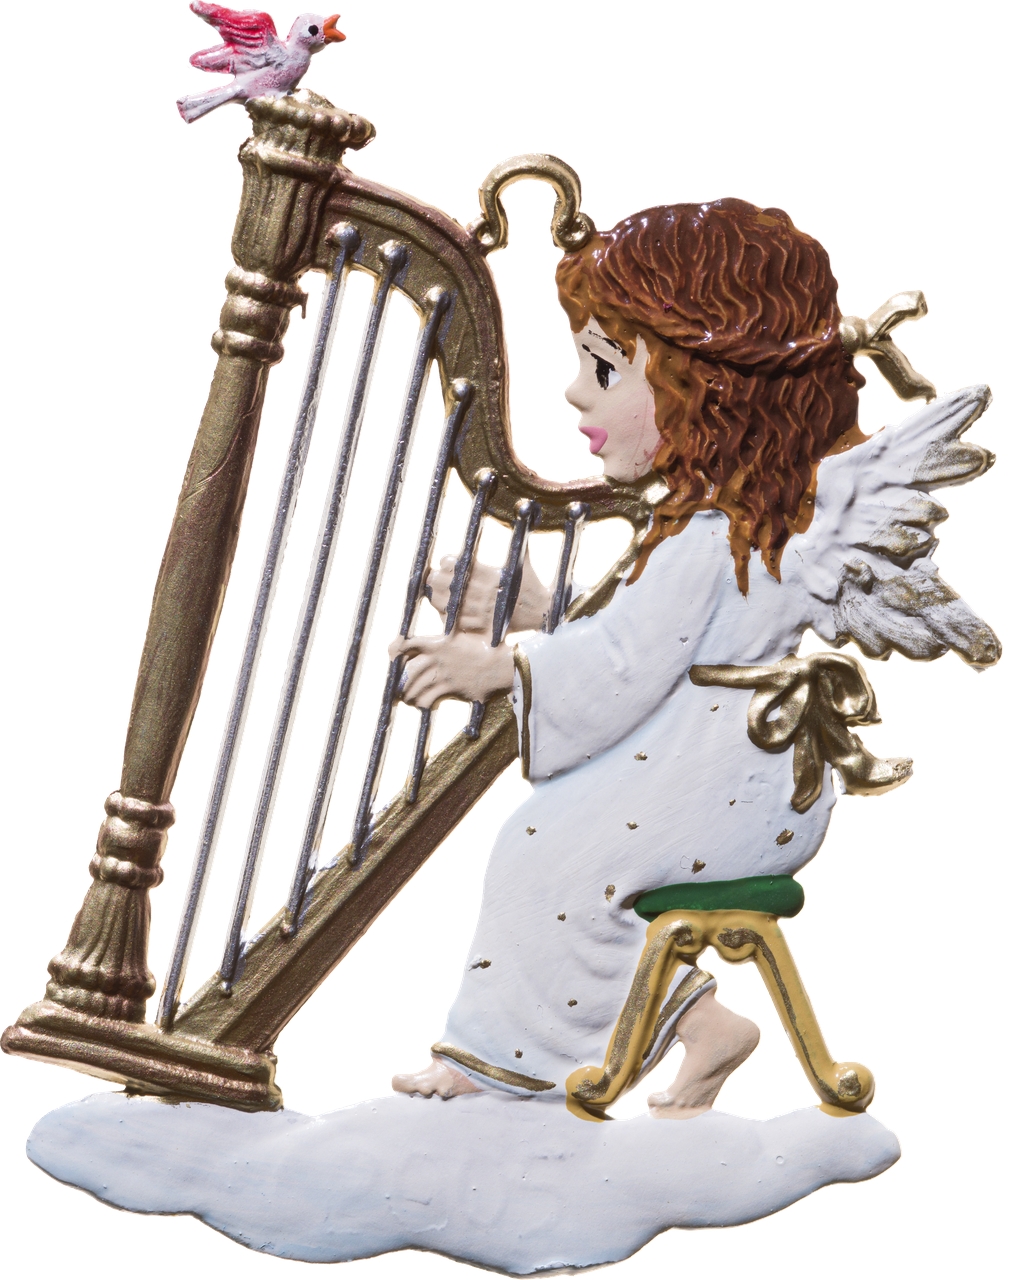 Engel spielt Harfe